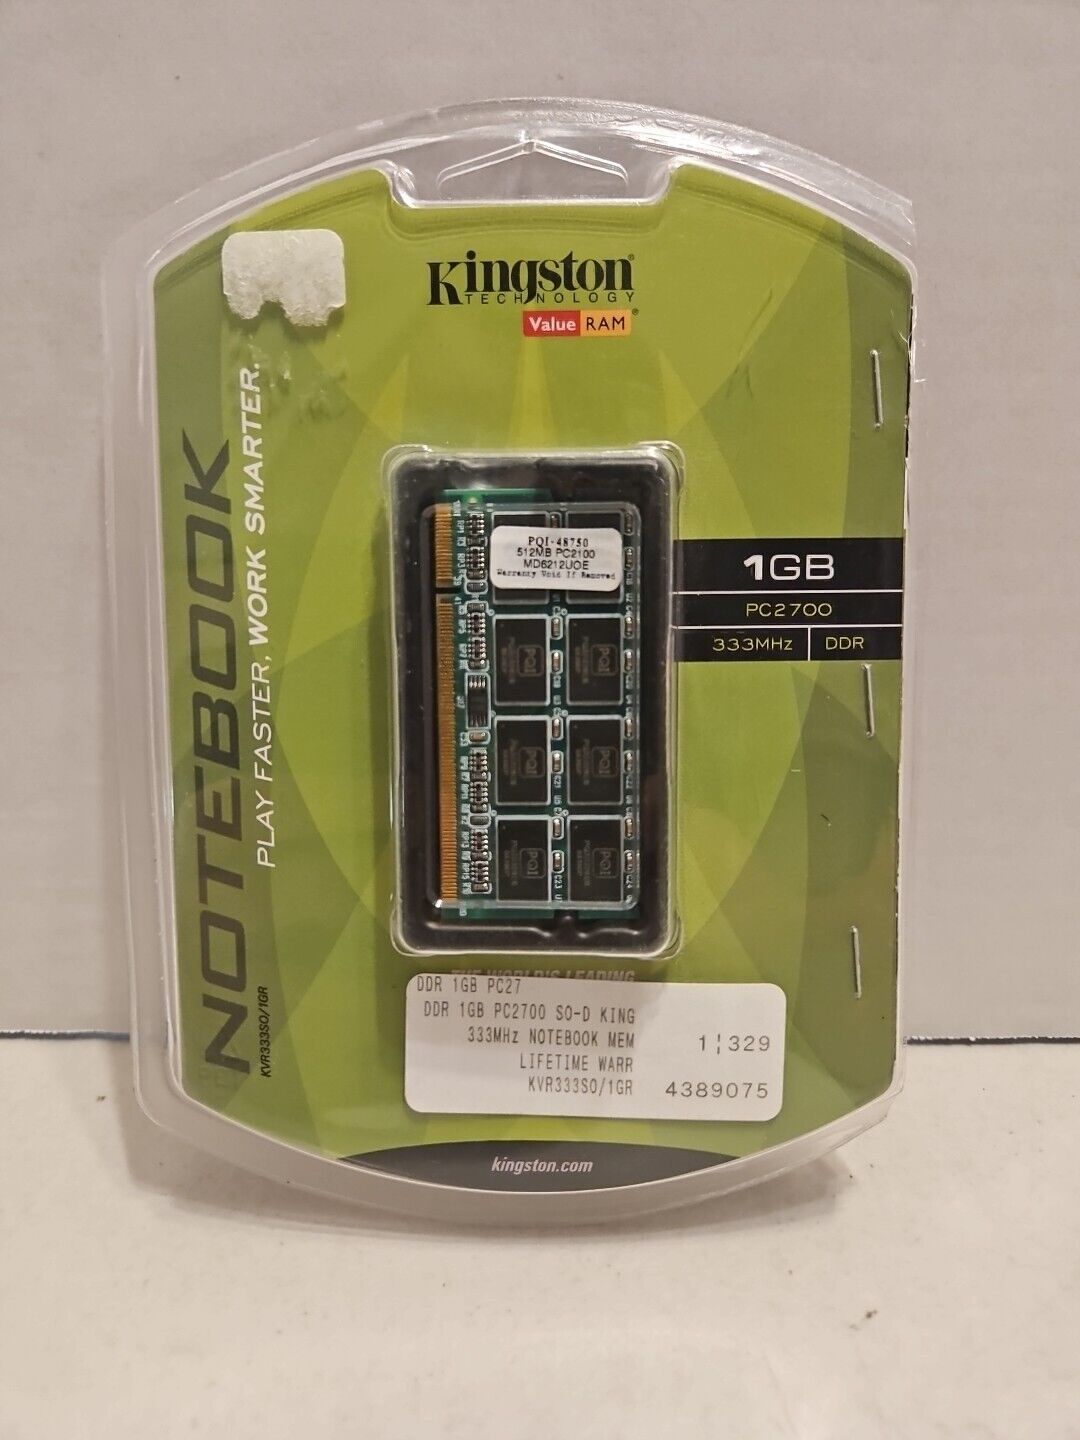 Kingston Technology Value RAM Notebook Memory 1GB KVR333S0 - New & Sealed